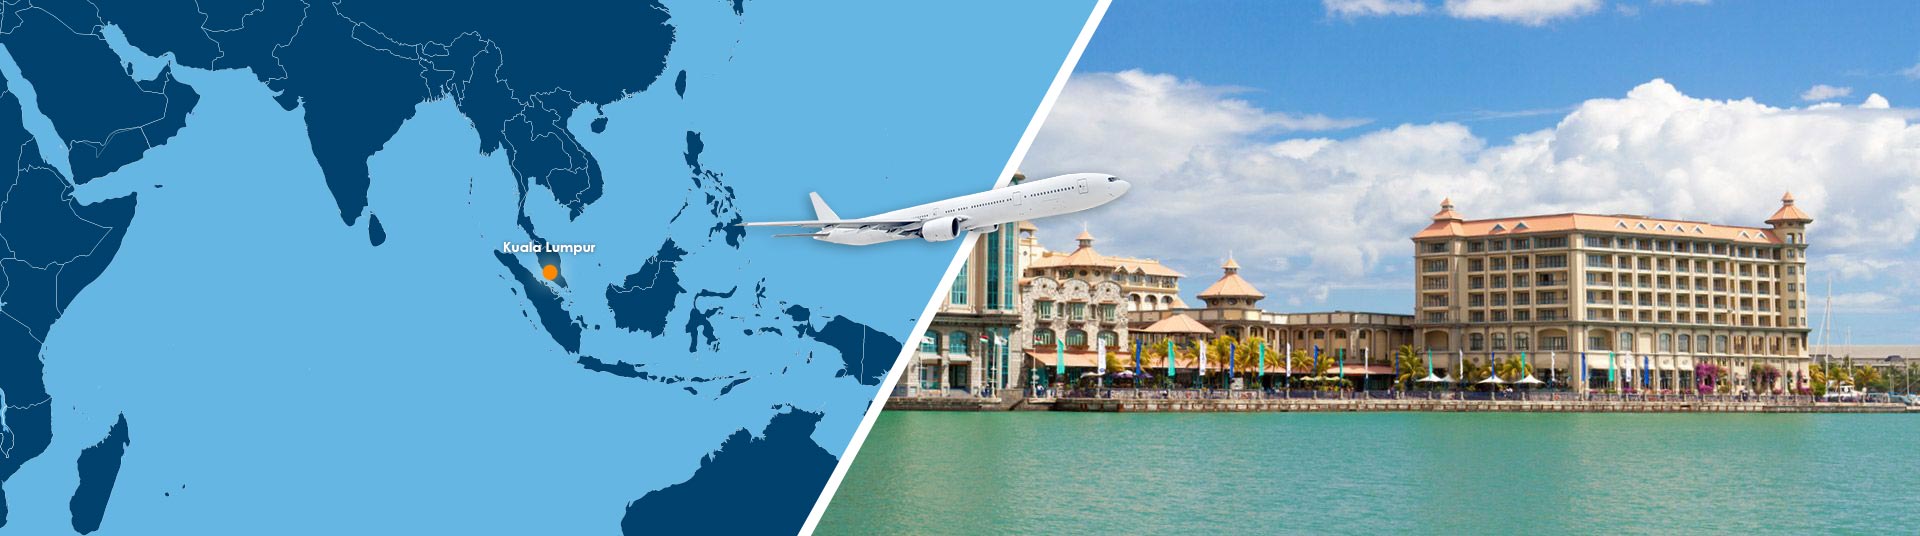 Vol Kuala Lumpur Port Louis pas cher : Réserver un billet avion KUL-MRU